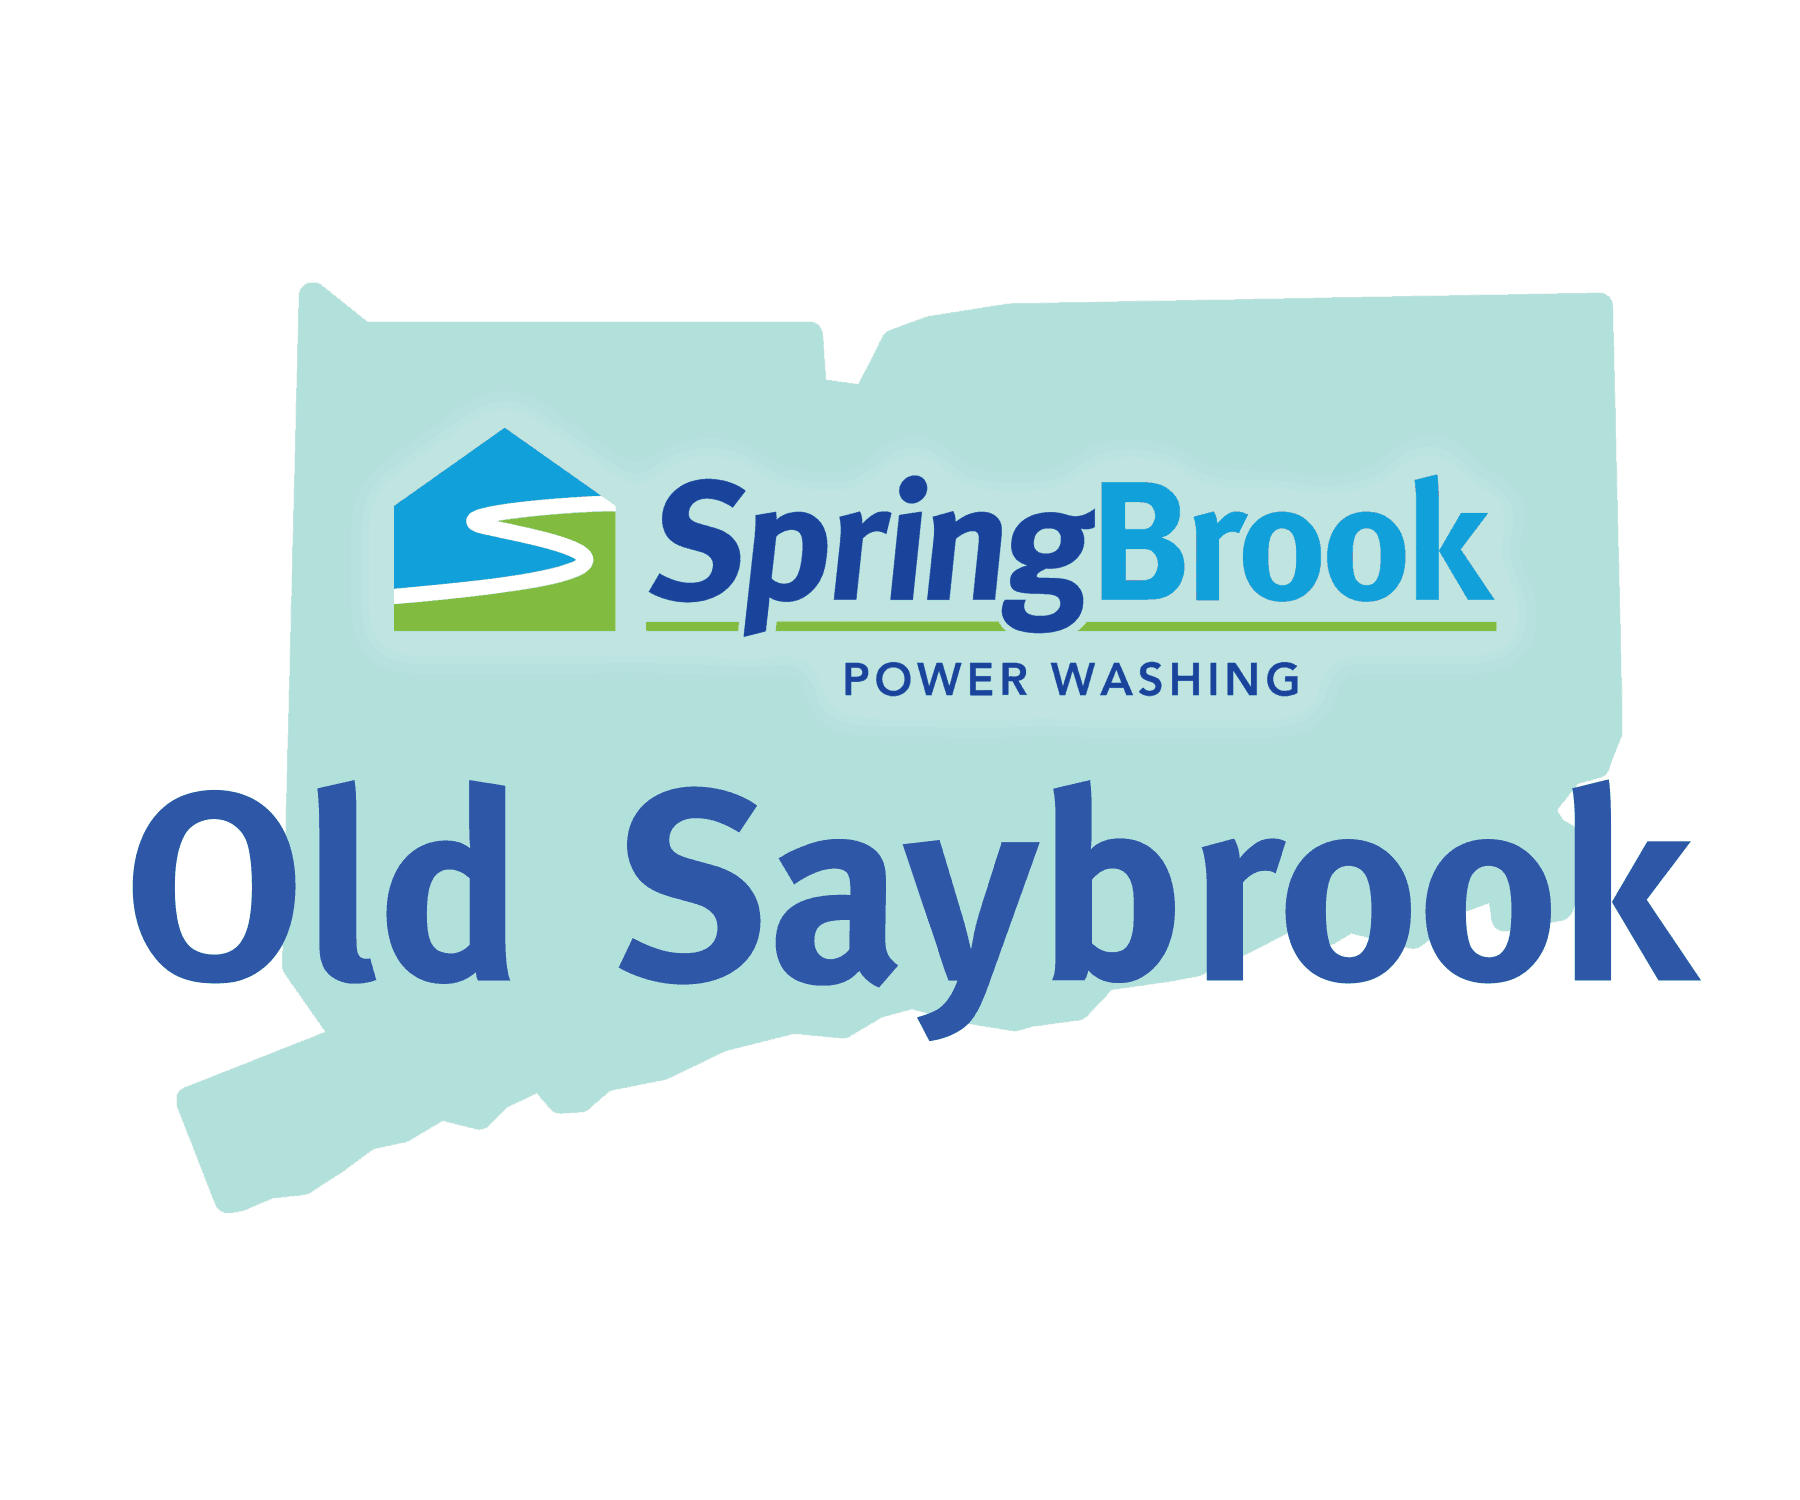 Springbrook Power Washing Old Saybrook